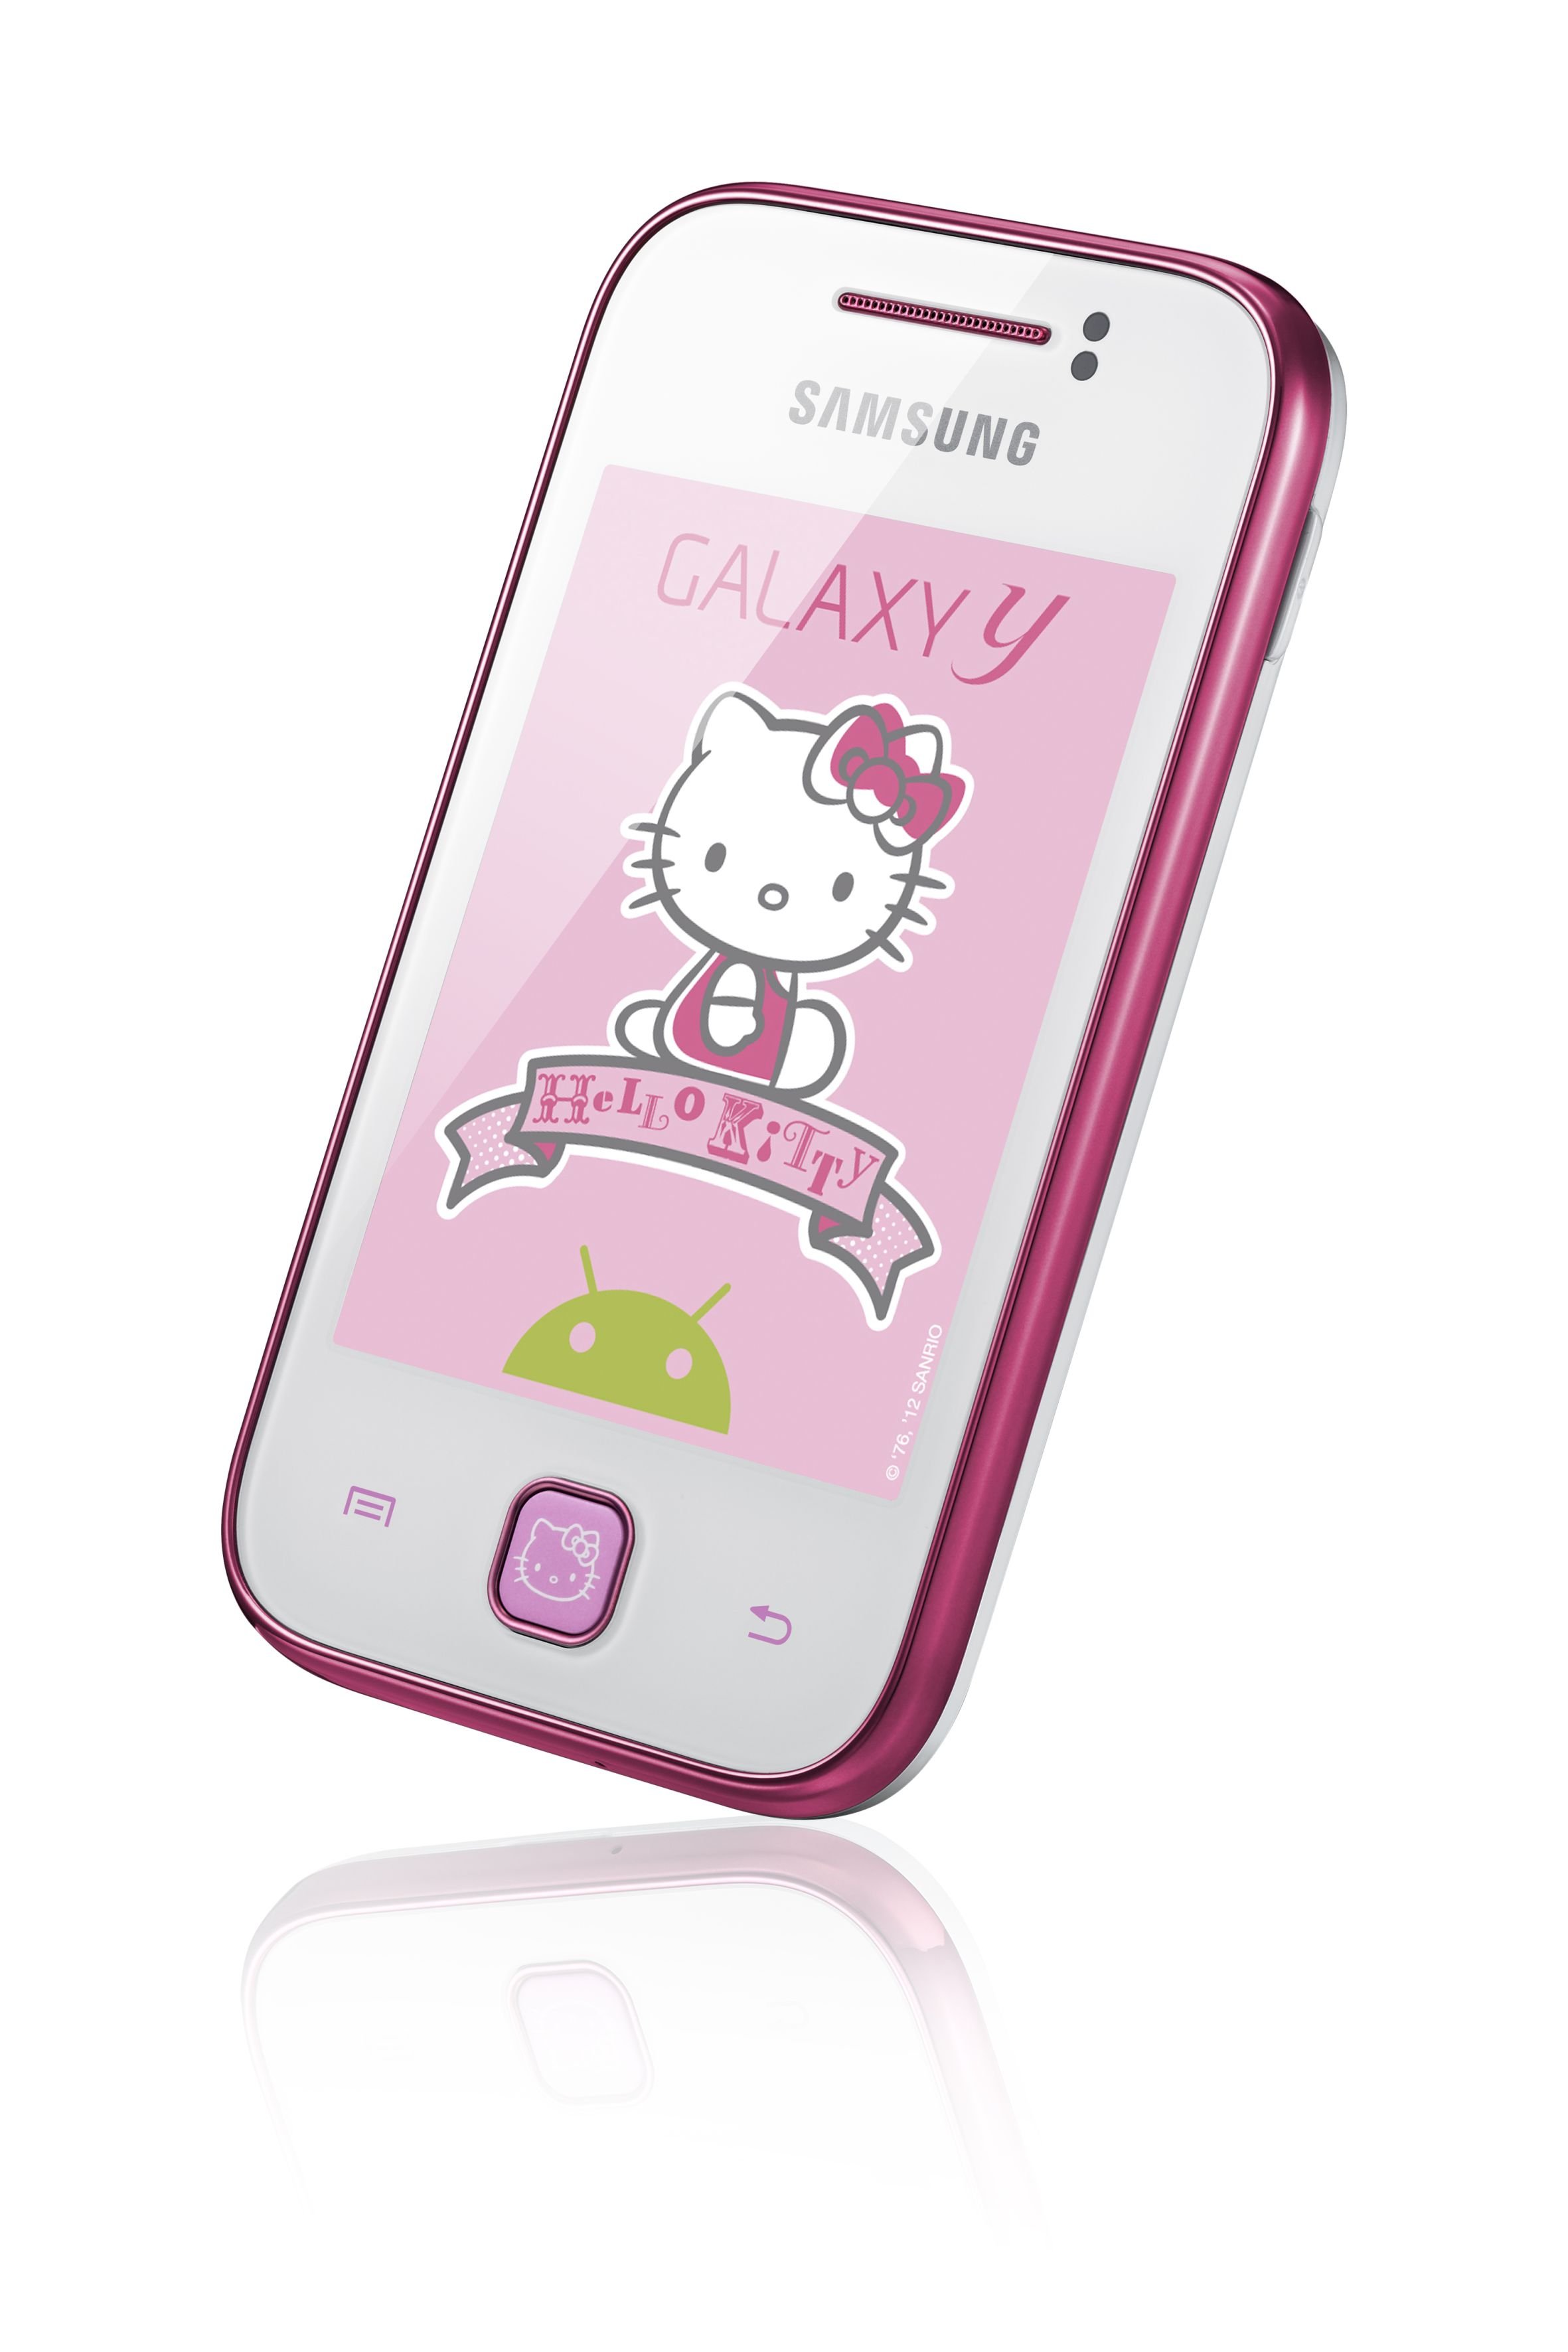 Samsung gt-s5360 hello Kitty